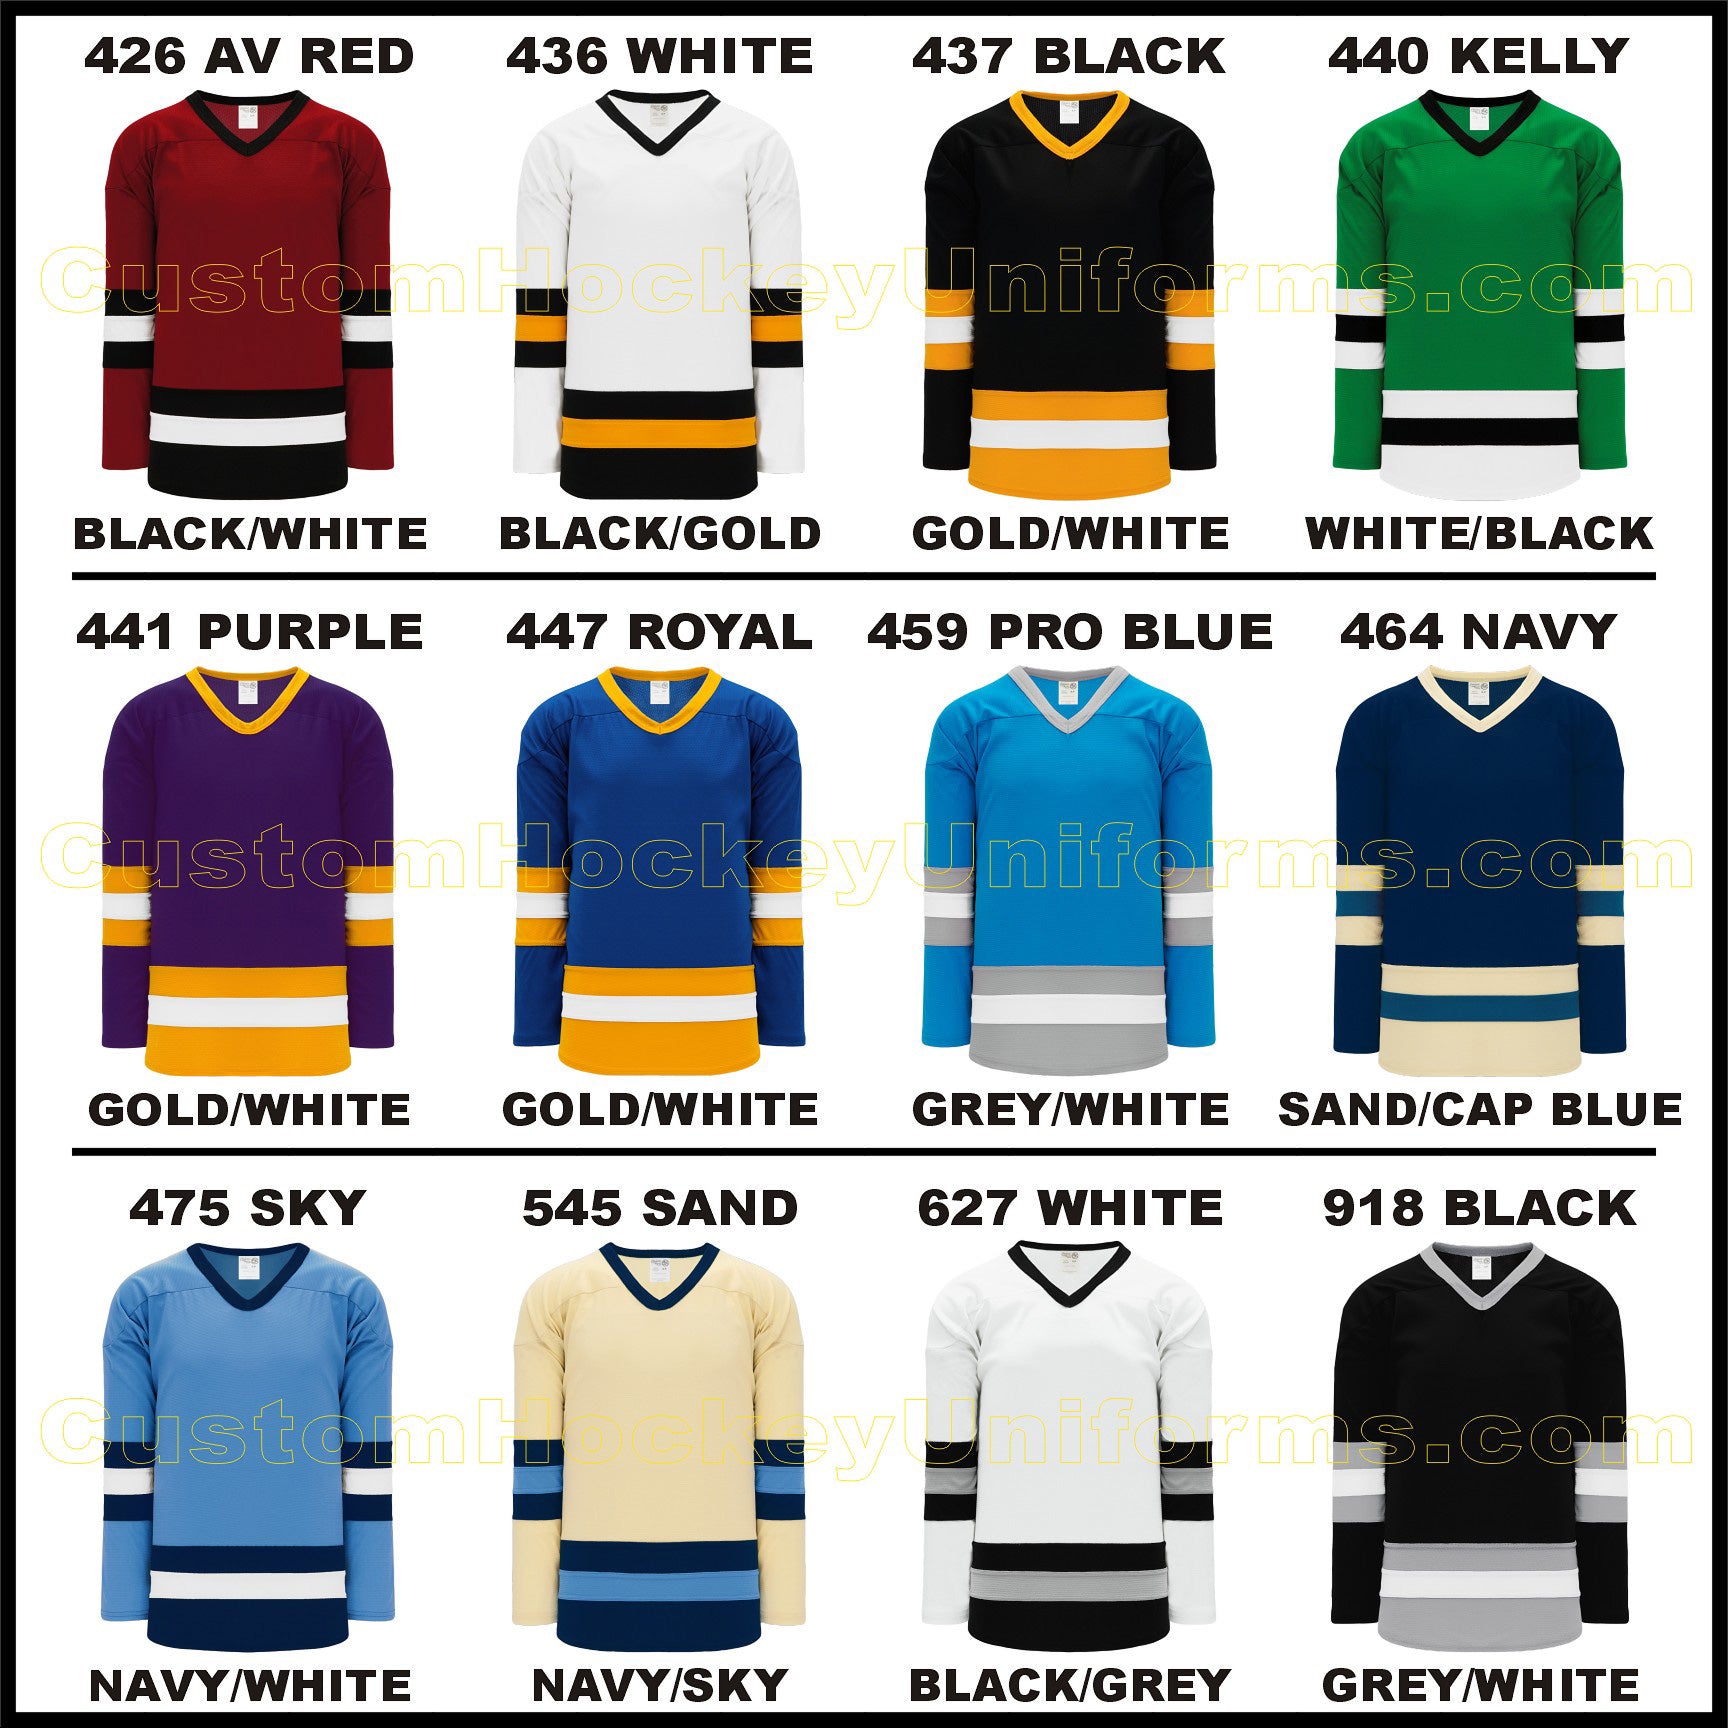 where to find hockey jerseys